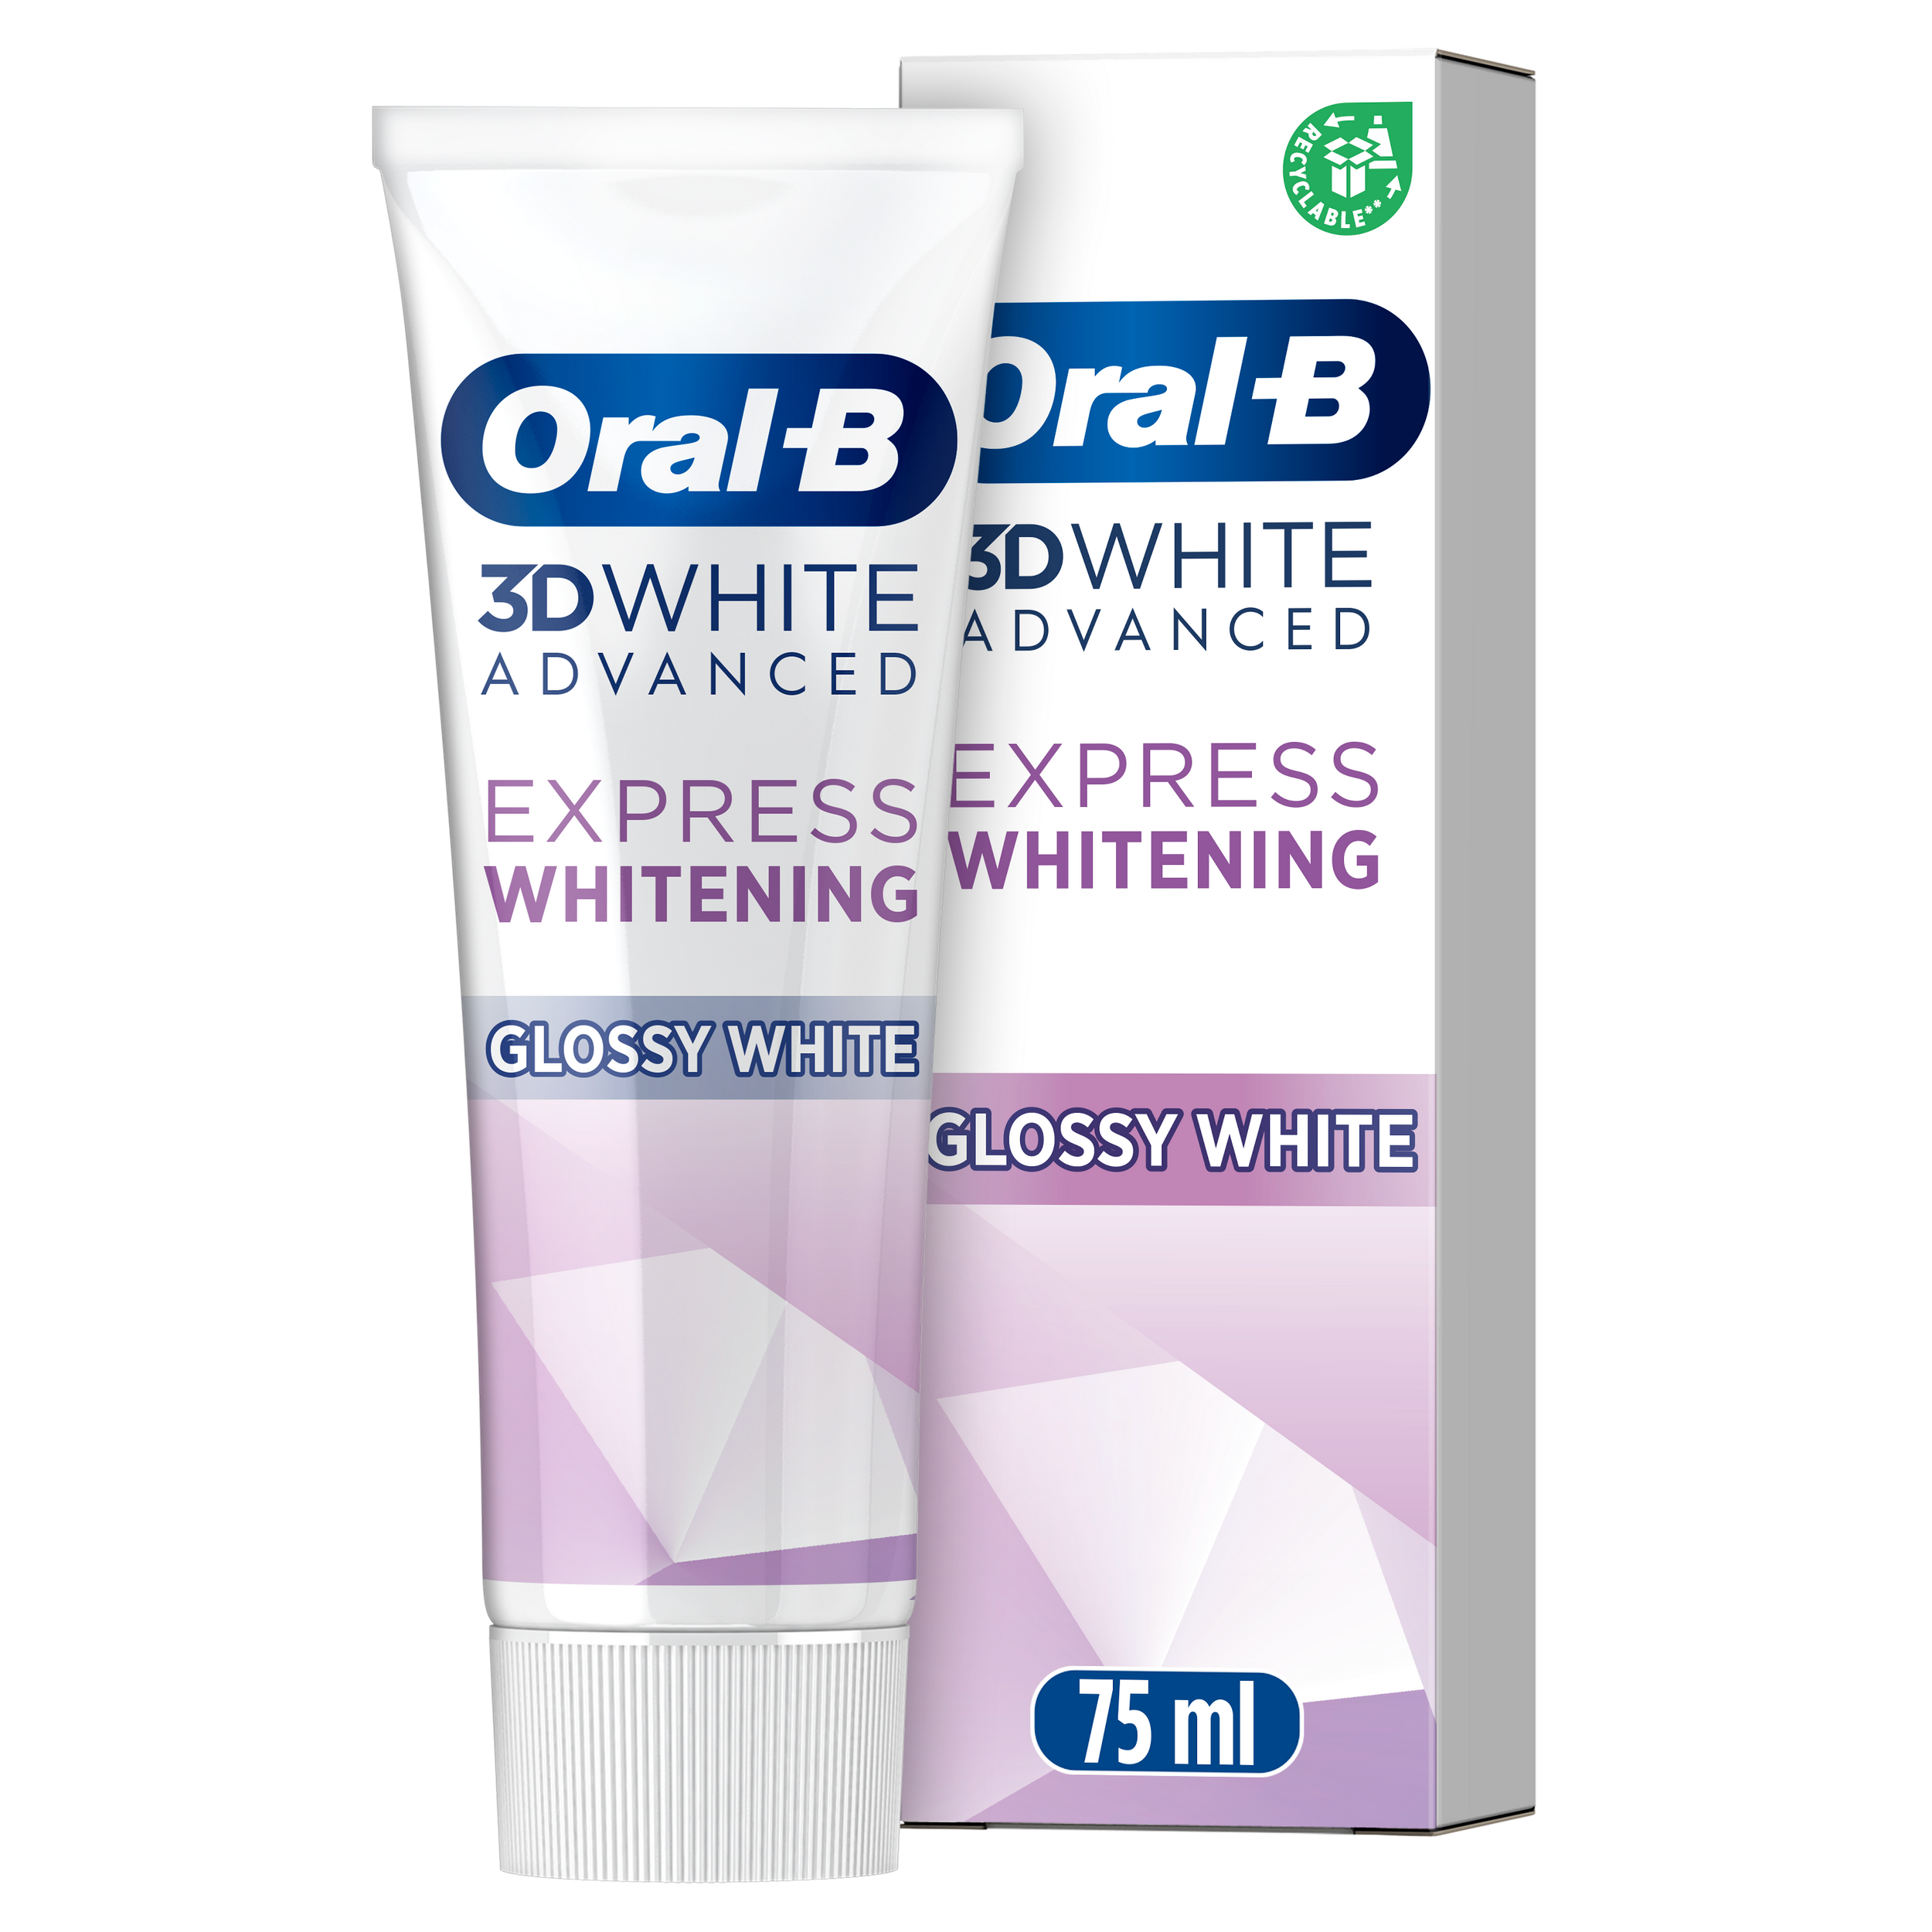 ORAL B 3D WHITE EXPRESS WHITENING GLOSSY WHITE TOOTHPASTE 75ML